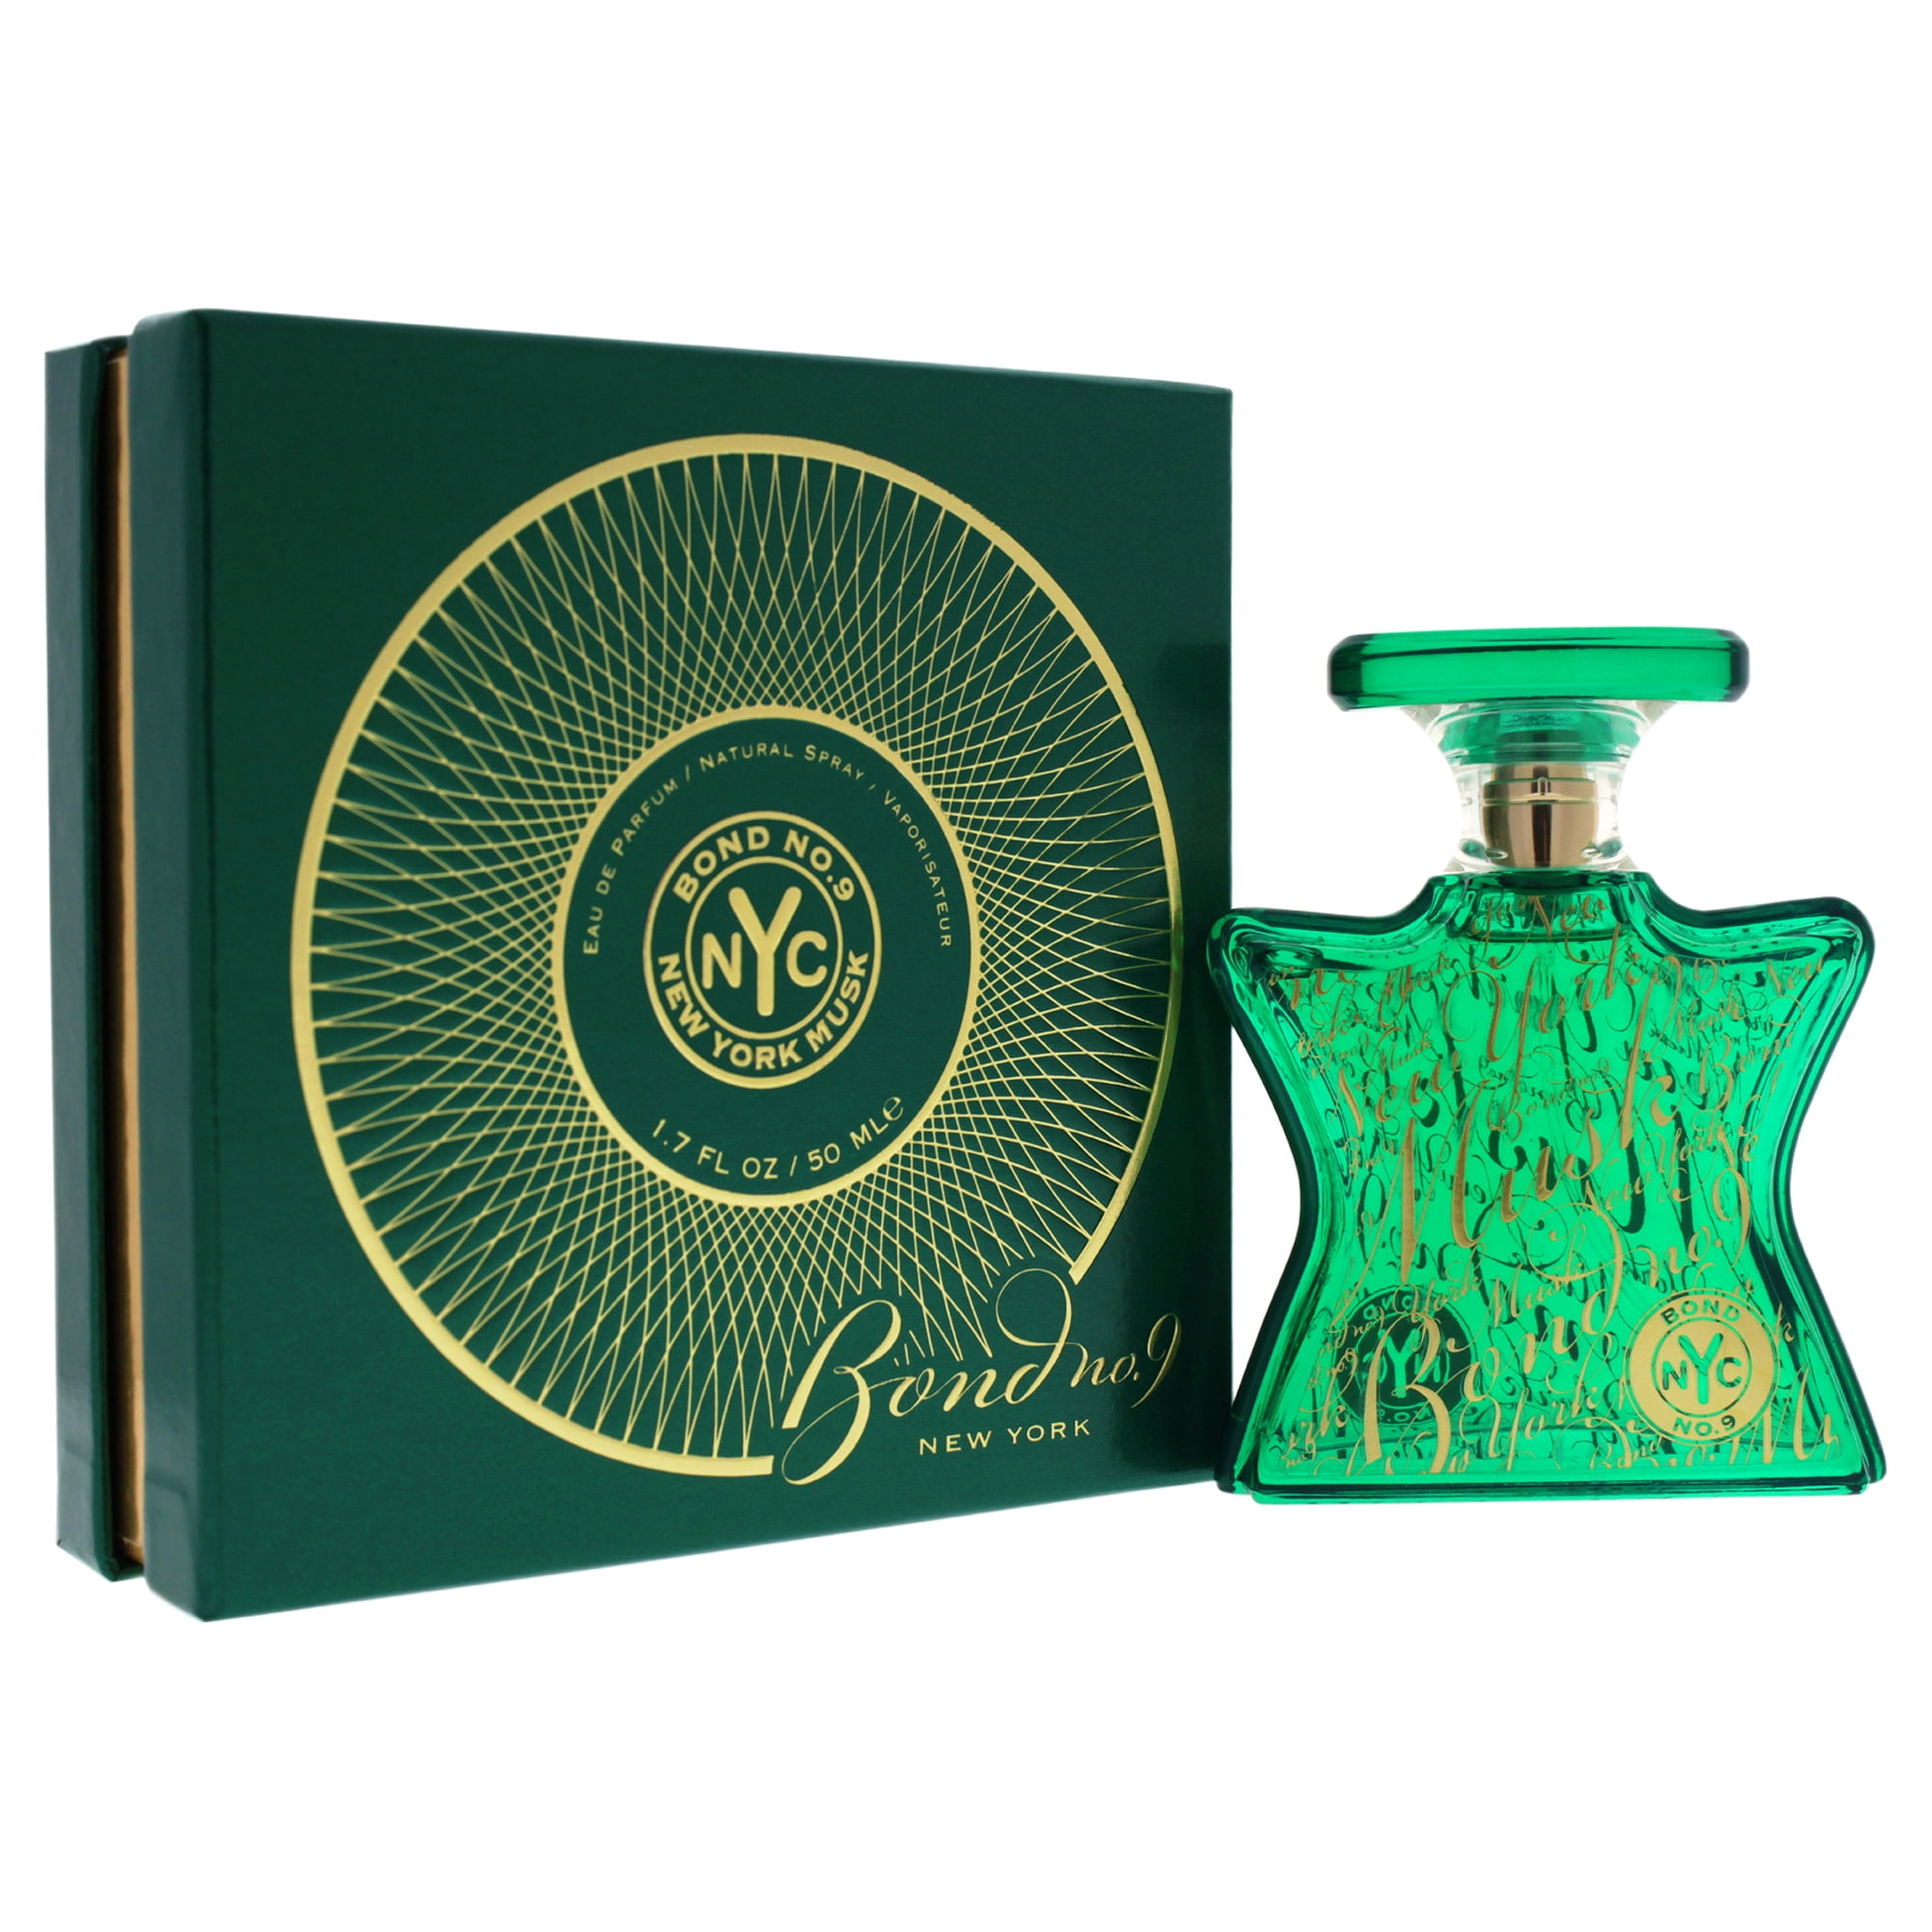 Bond No. 9 New York Musk Eau de Parfum, Unisex Fragrance, 1.7 Oz